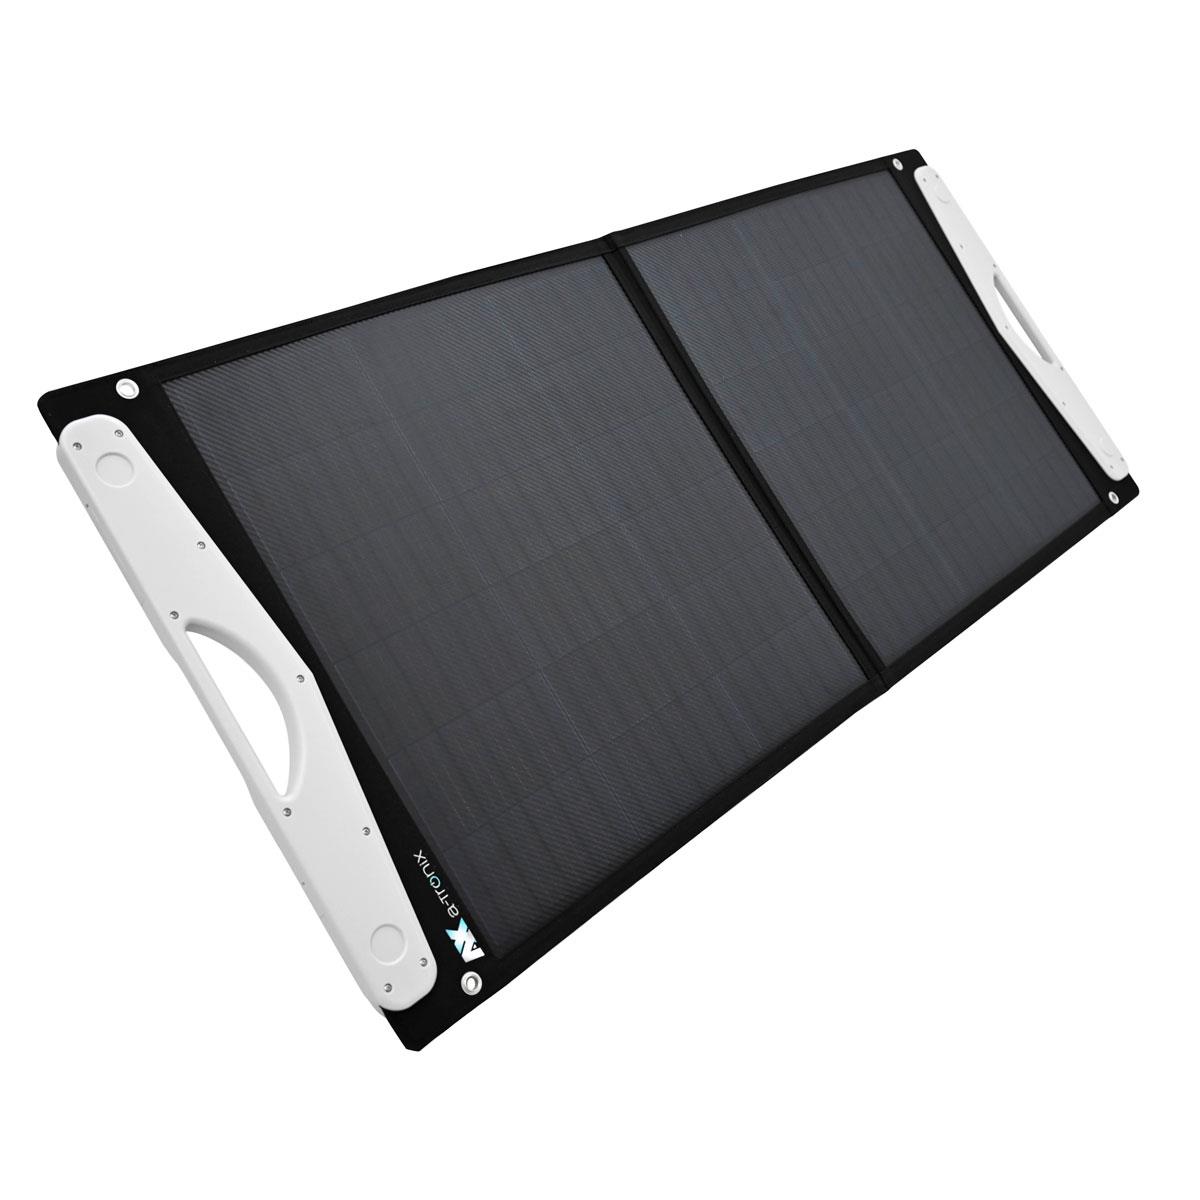 EcoFlow River 2 MAX 512Wh Powerstation mit 100W Solarpanel